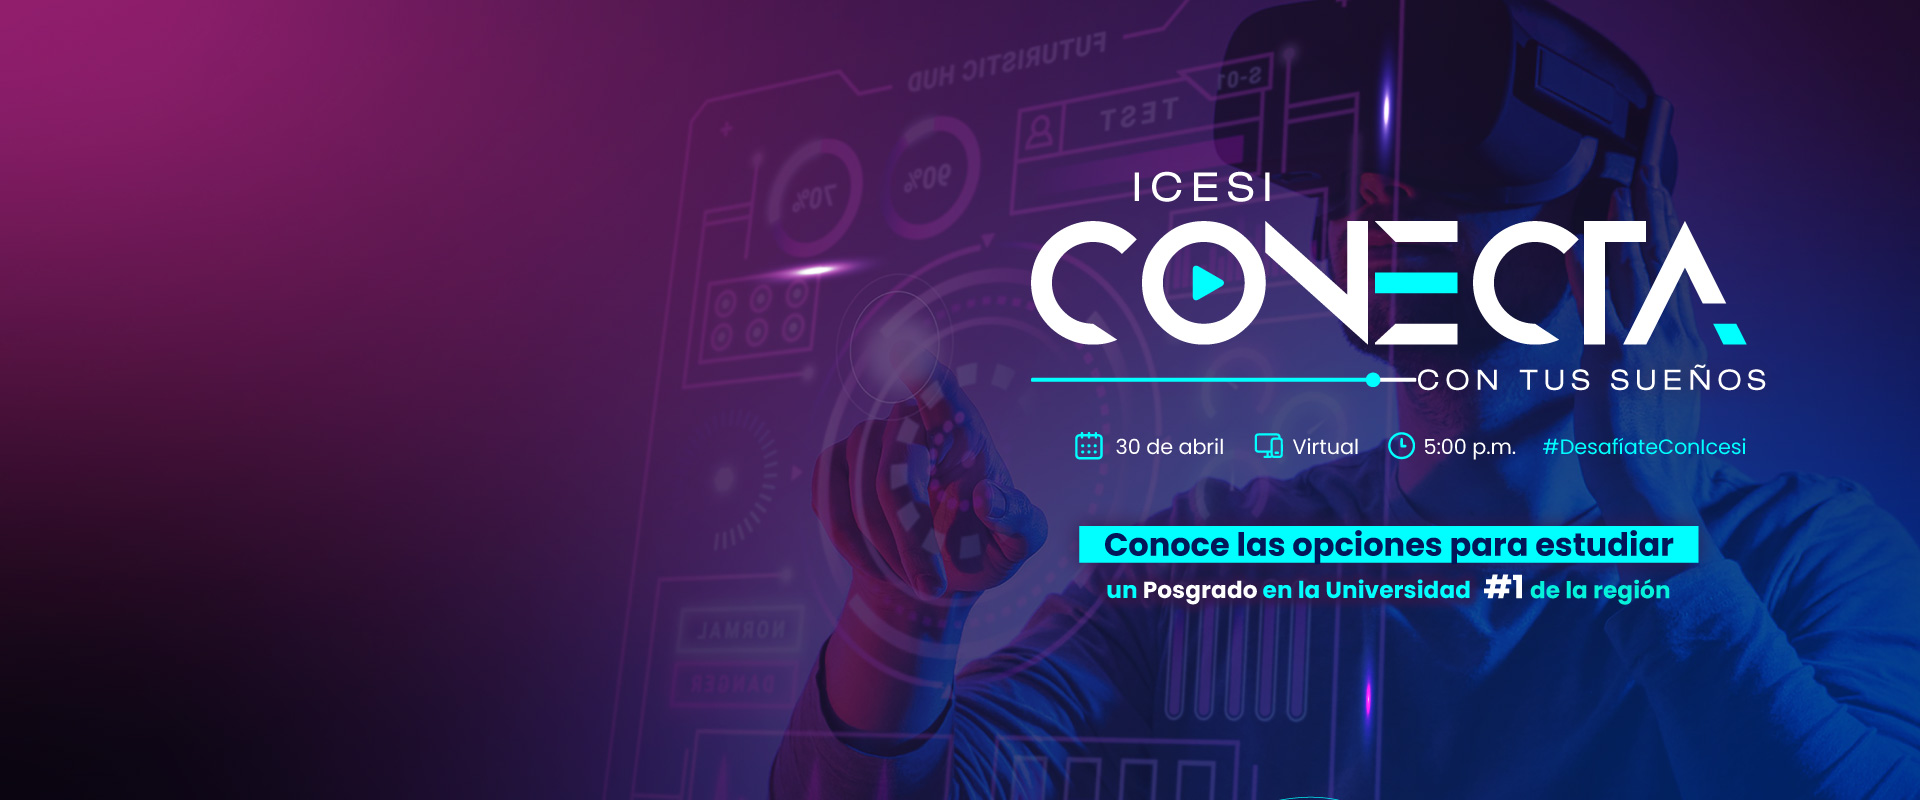 ICESI CONECTA